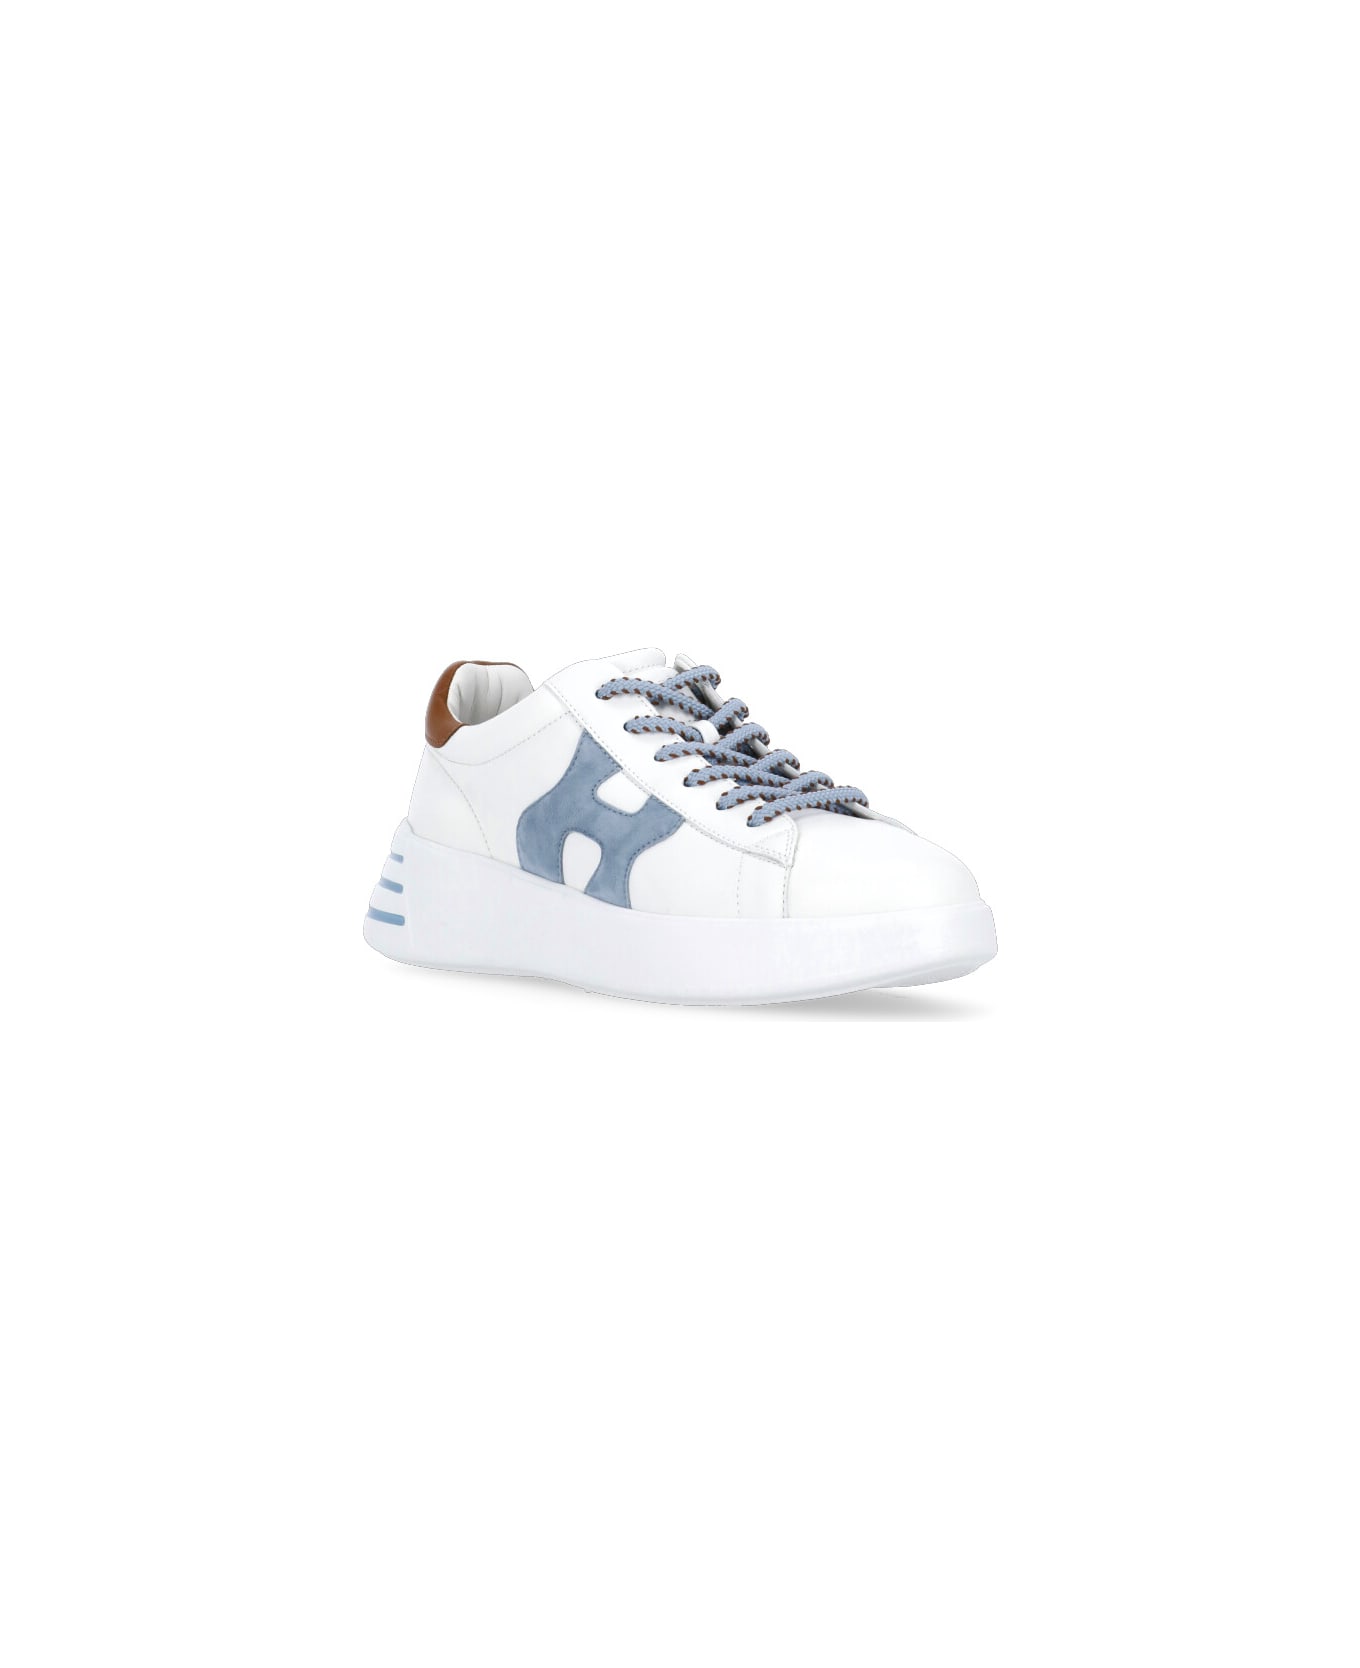 Hogan Rebel H564 Sneakers - White スニーカー